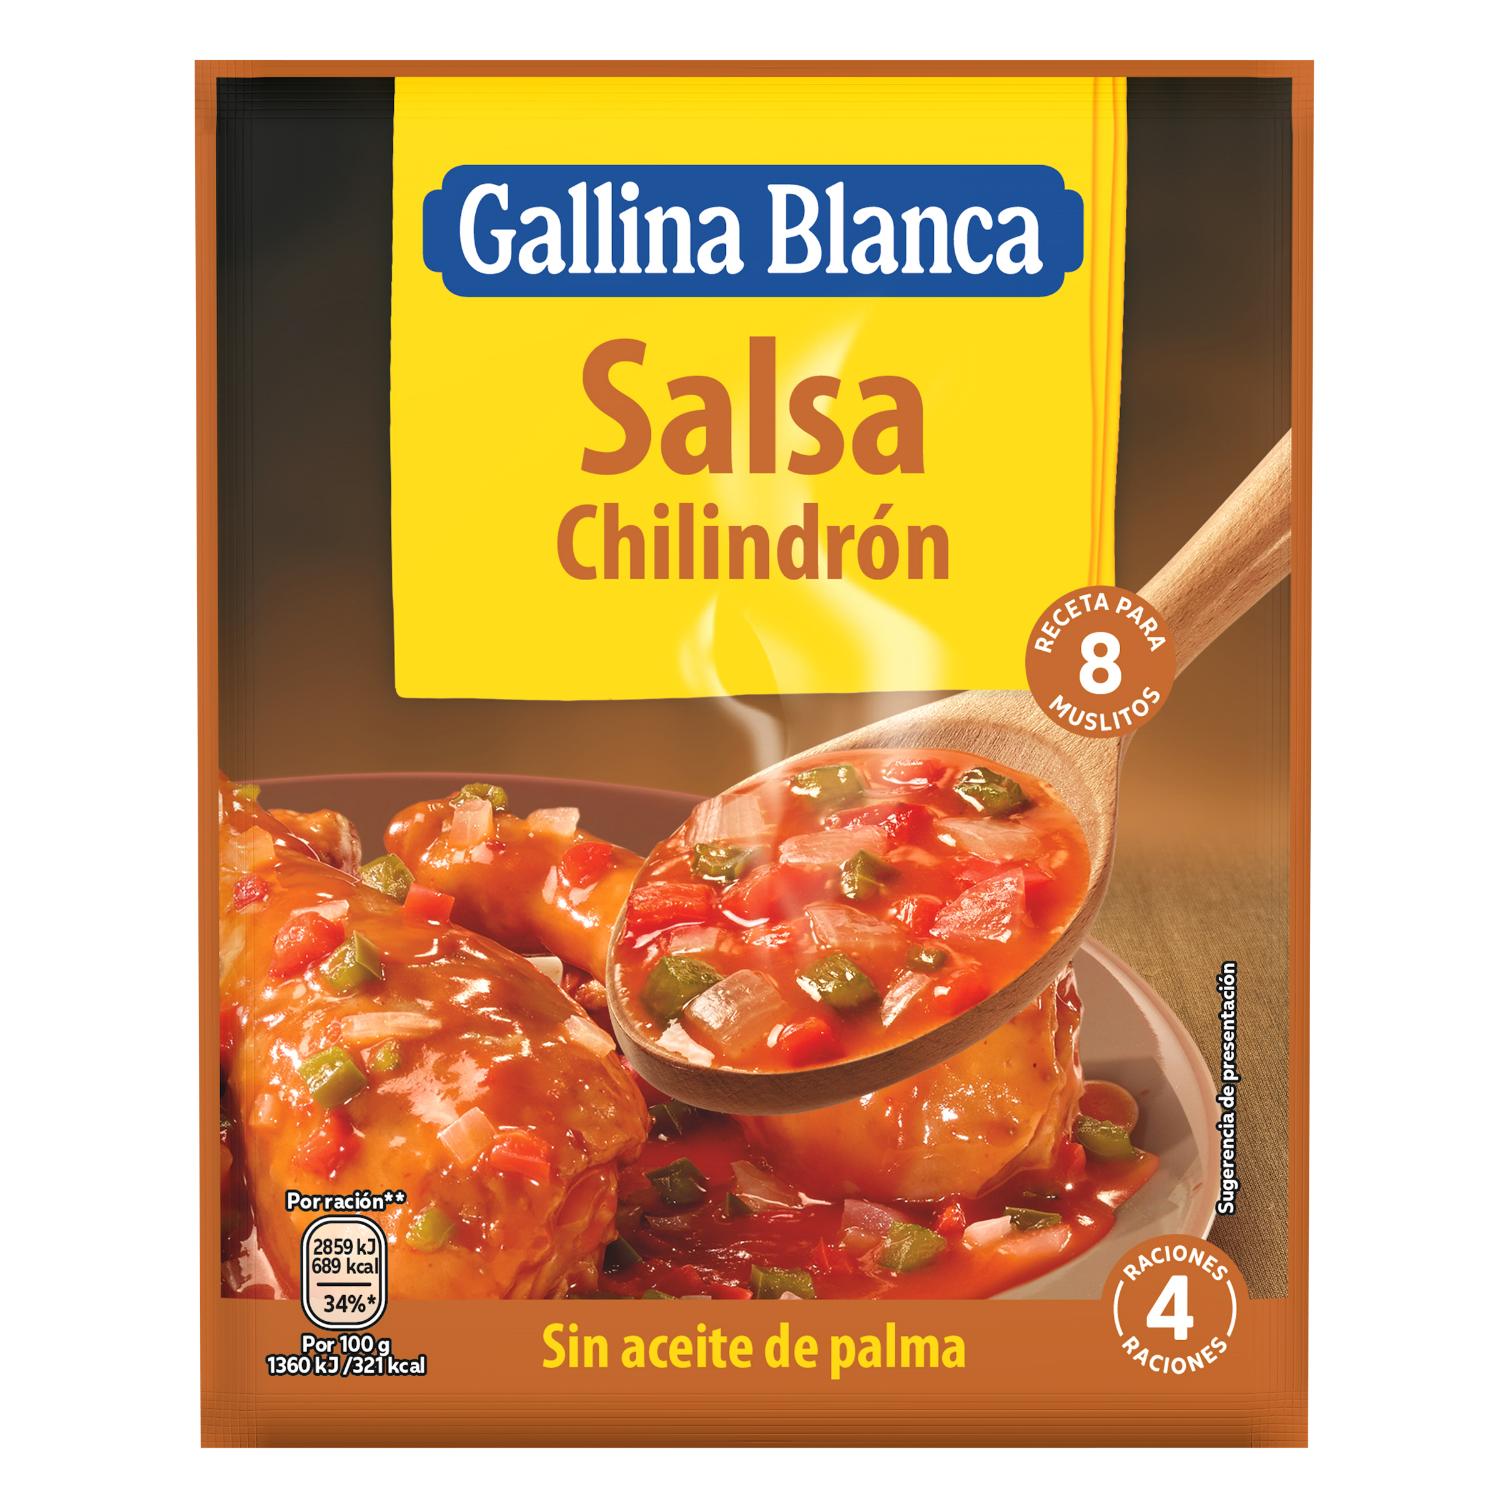 salsa chilindron gallina blanca 39 g